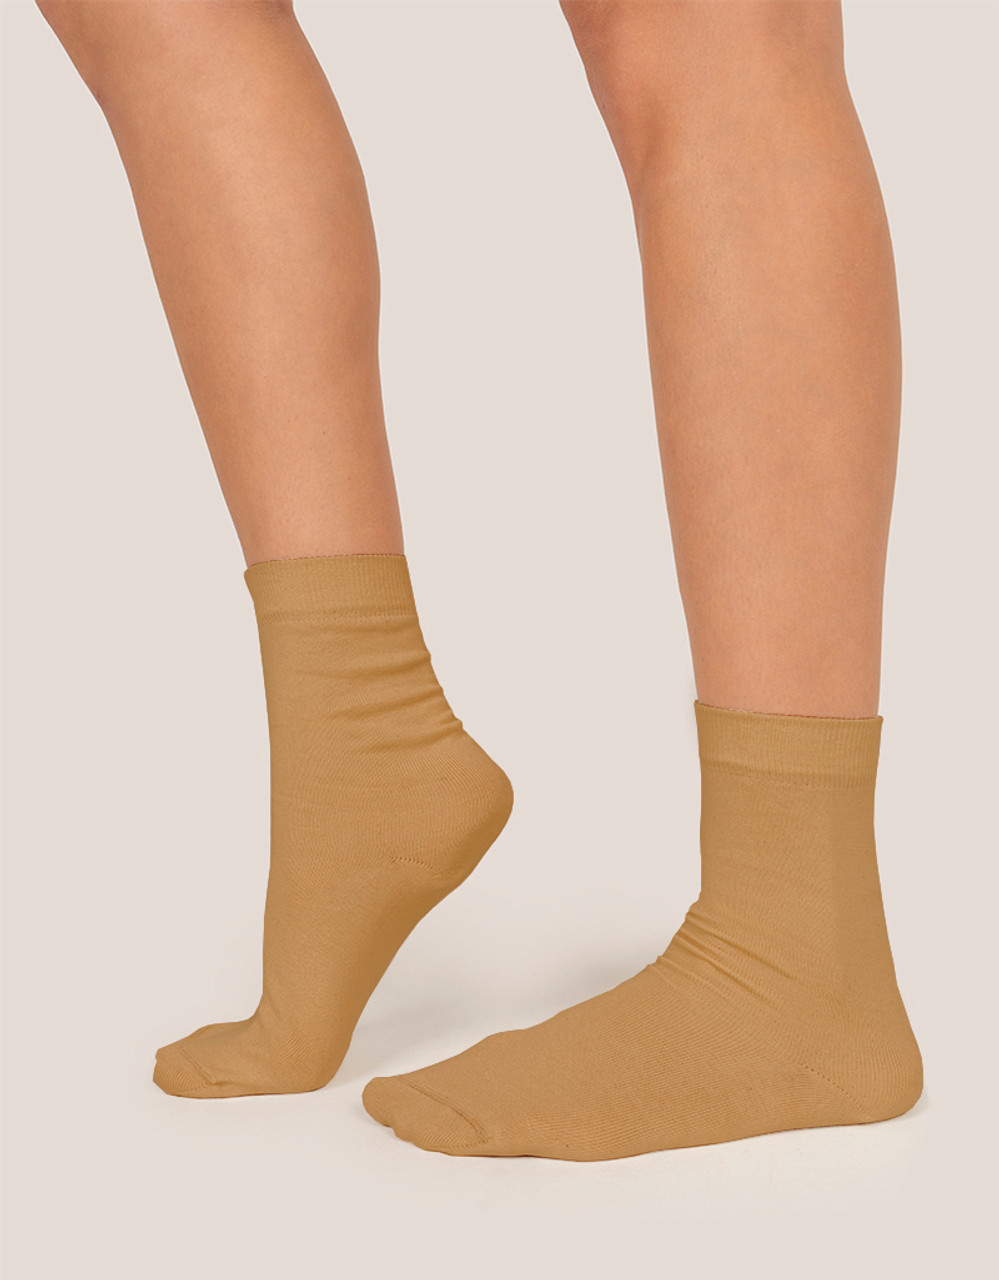 DRESP Toe and Heel-free Elegant Yoga Socks With Anti-slip Sole